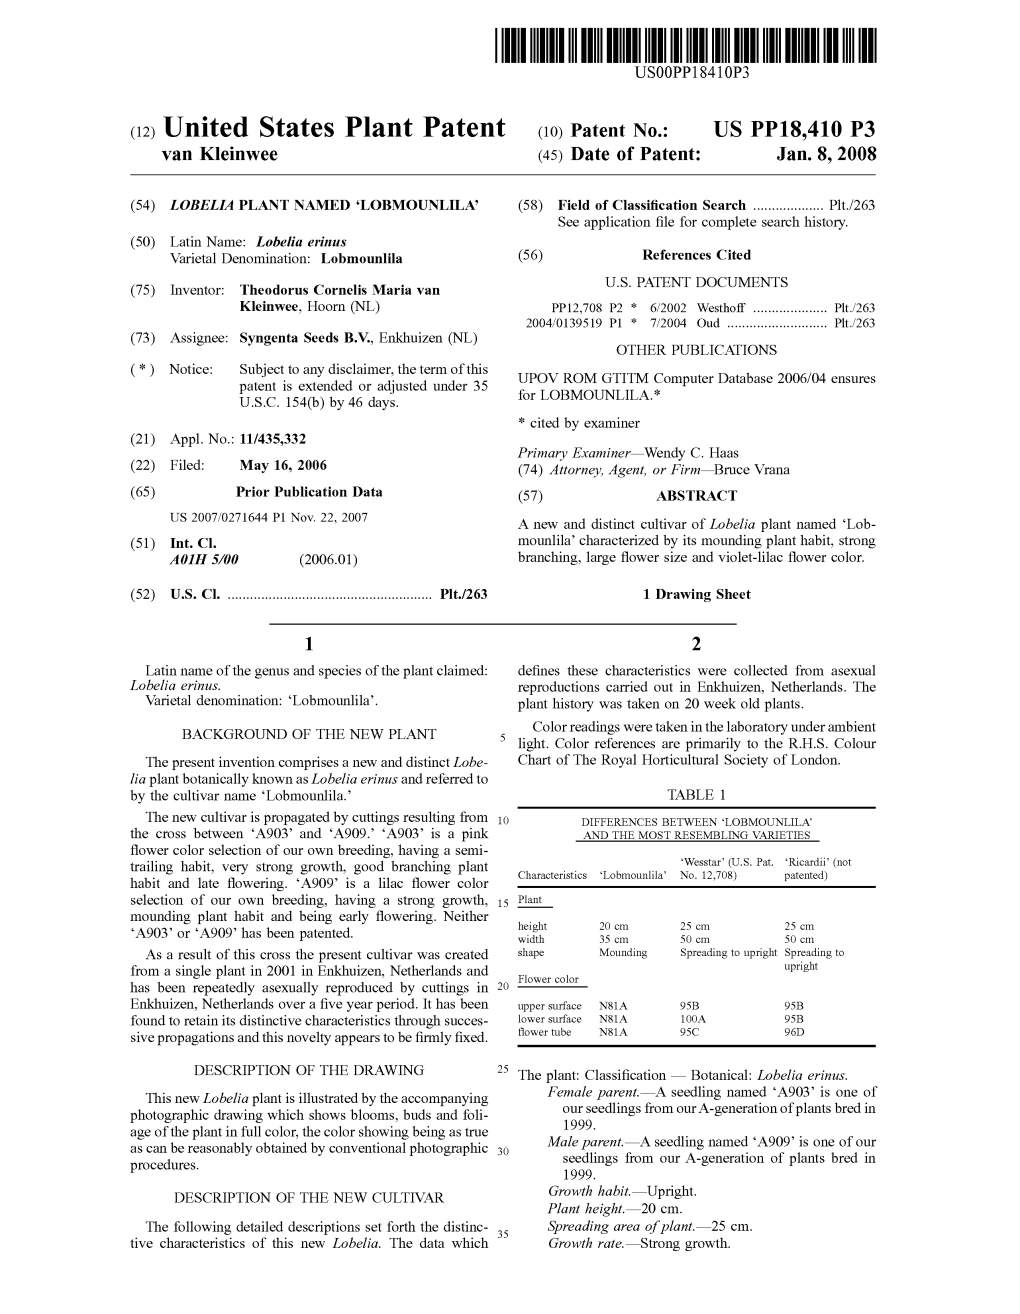 (12) United States Plant Patent (10) Patent No.: US PP18.410 P3 Van Kleinwee (45) Date of Patent: Jan